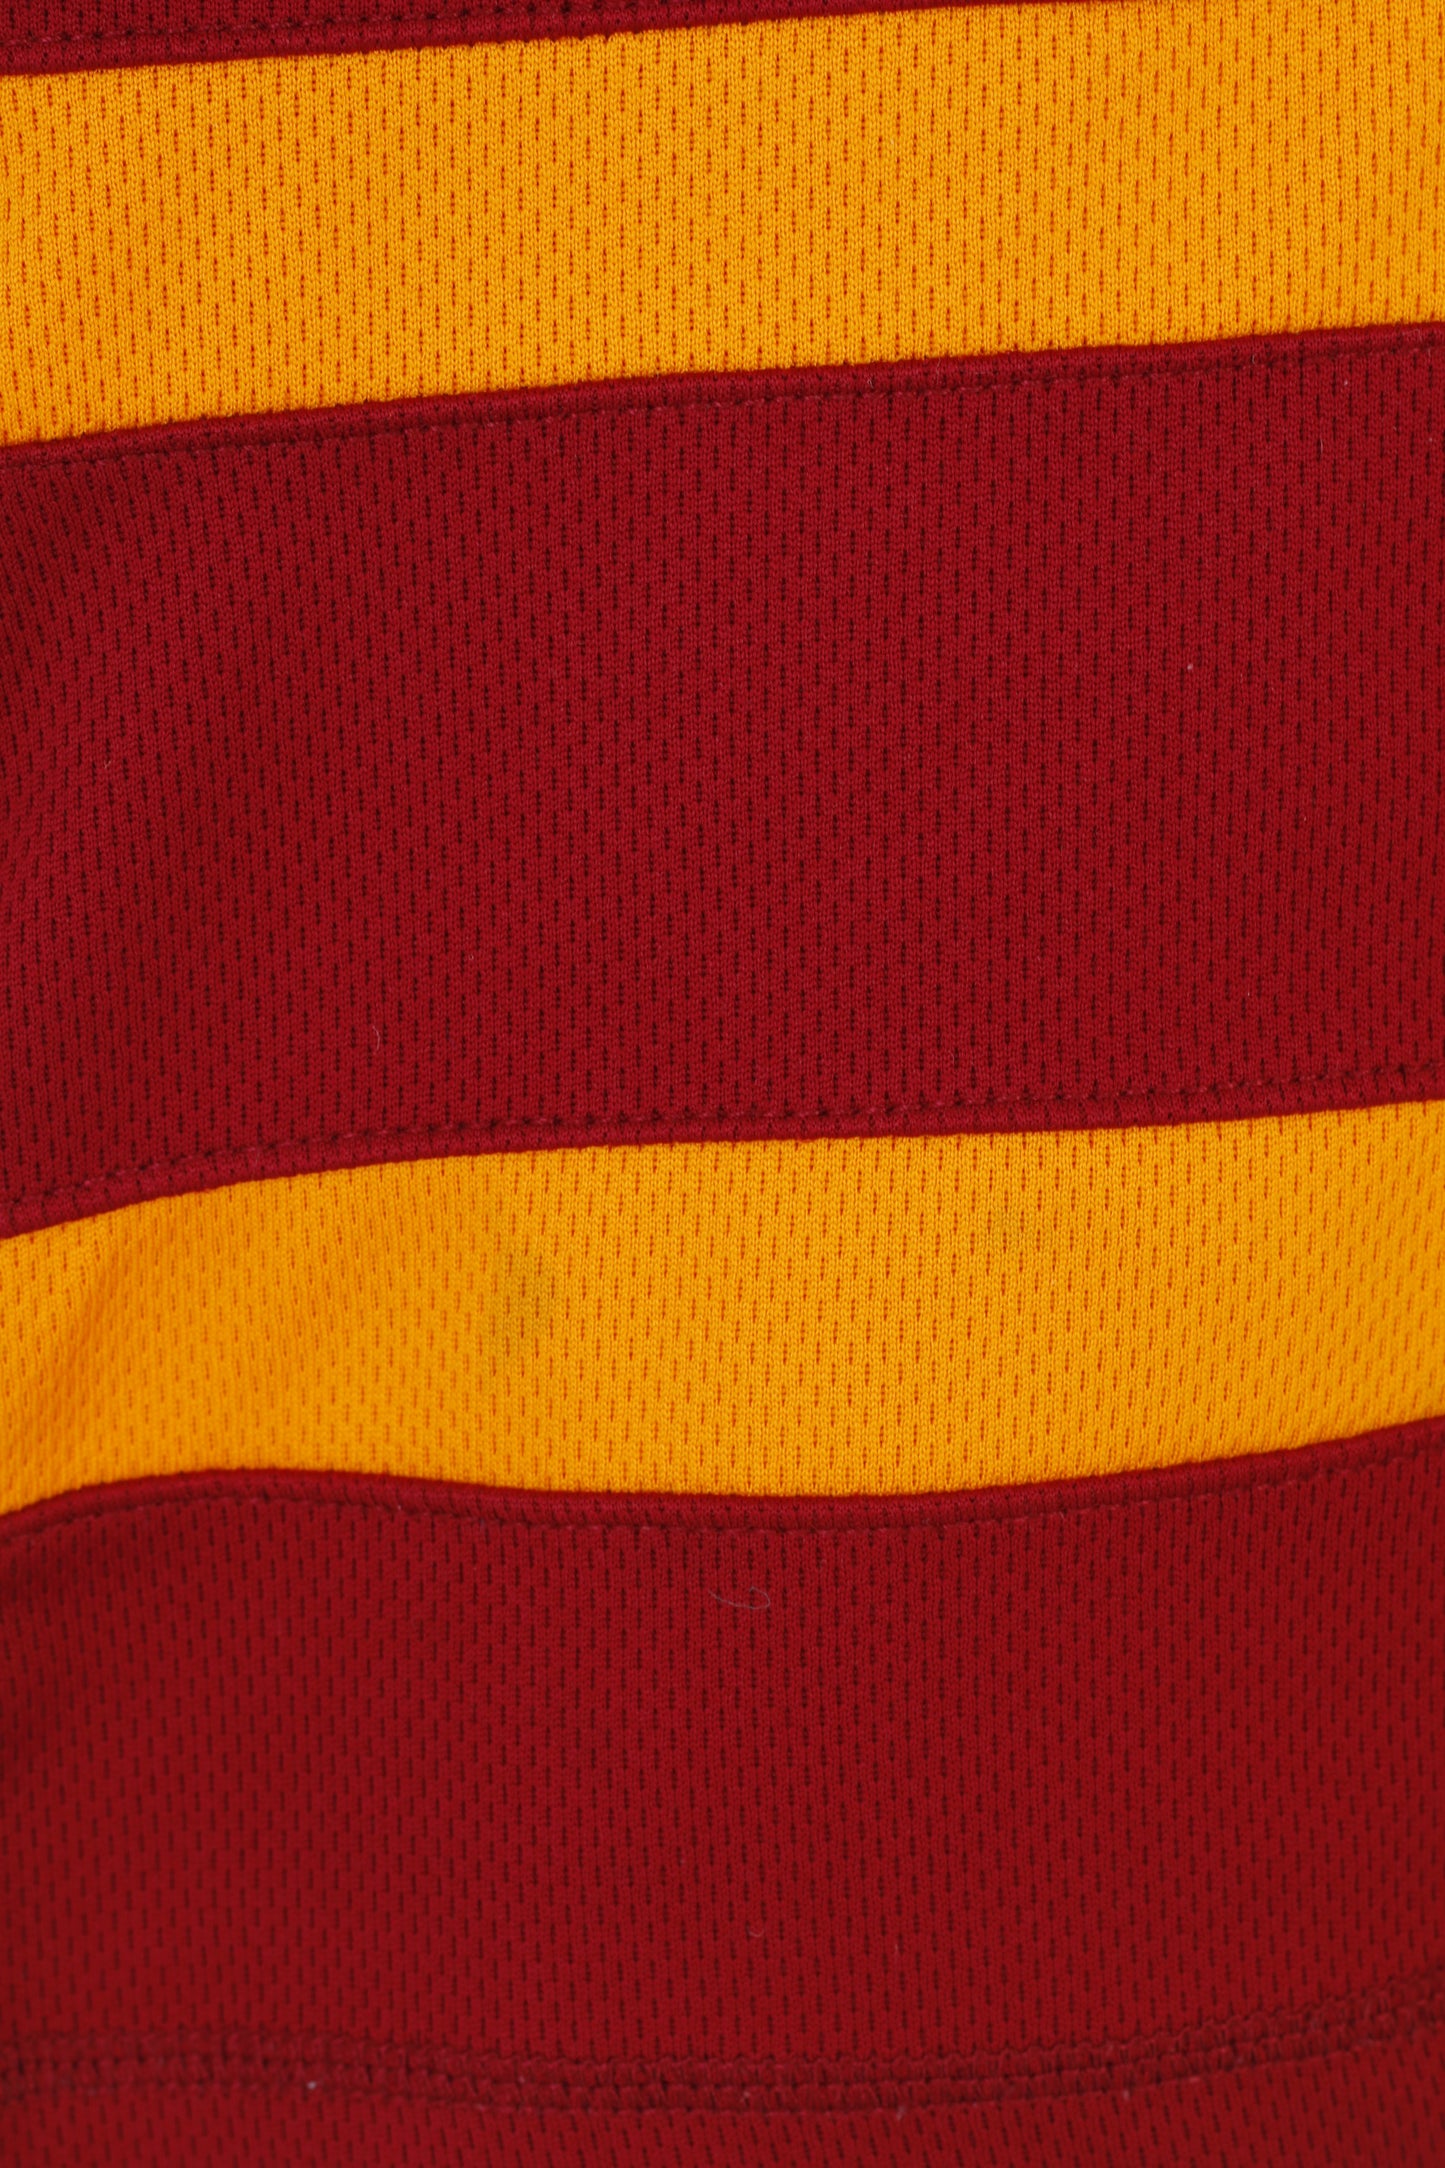 Kooga Boys MDB 10 Age Shirt Sport Polyester Burgundy Short Sleeve University Of Huddersfield Rugby Giants Jersey Top